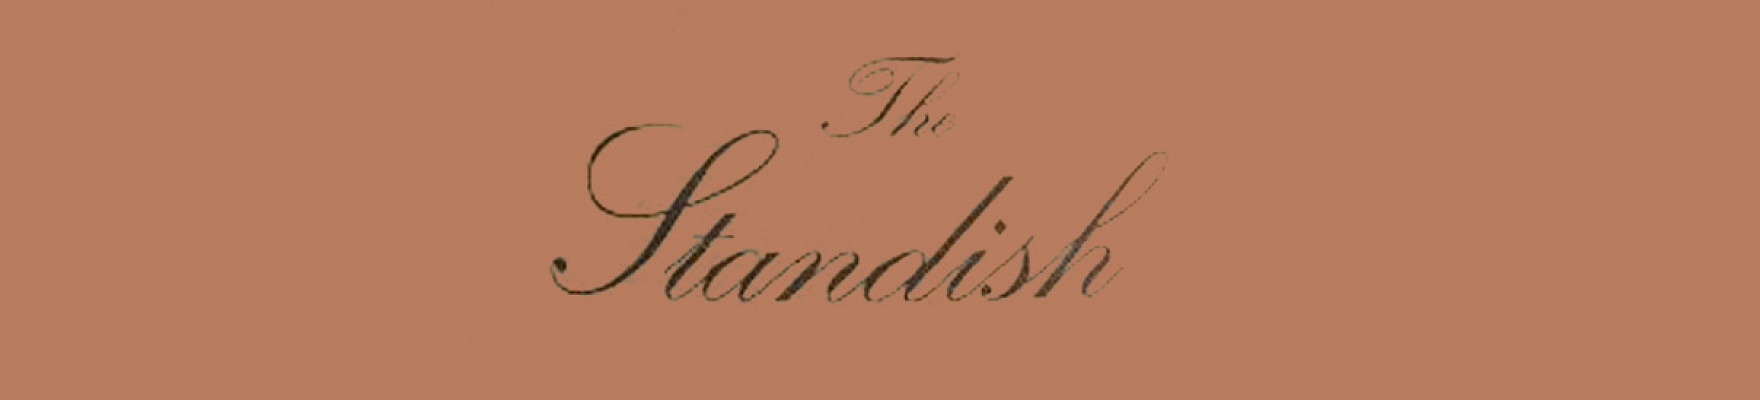 The Standish Wine Company